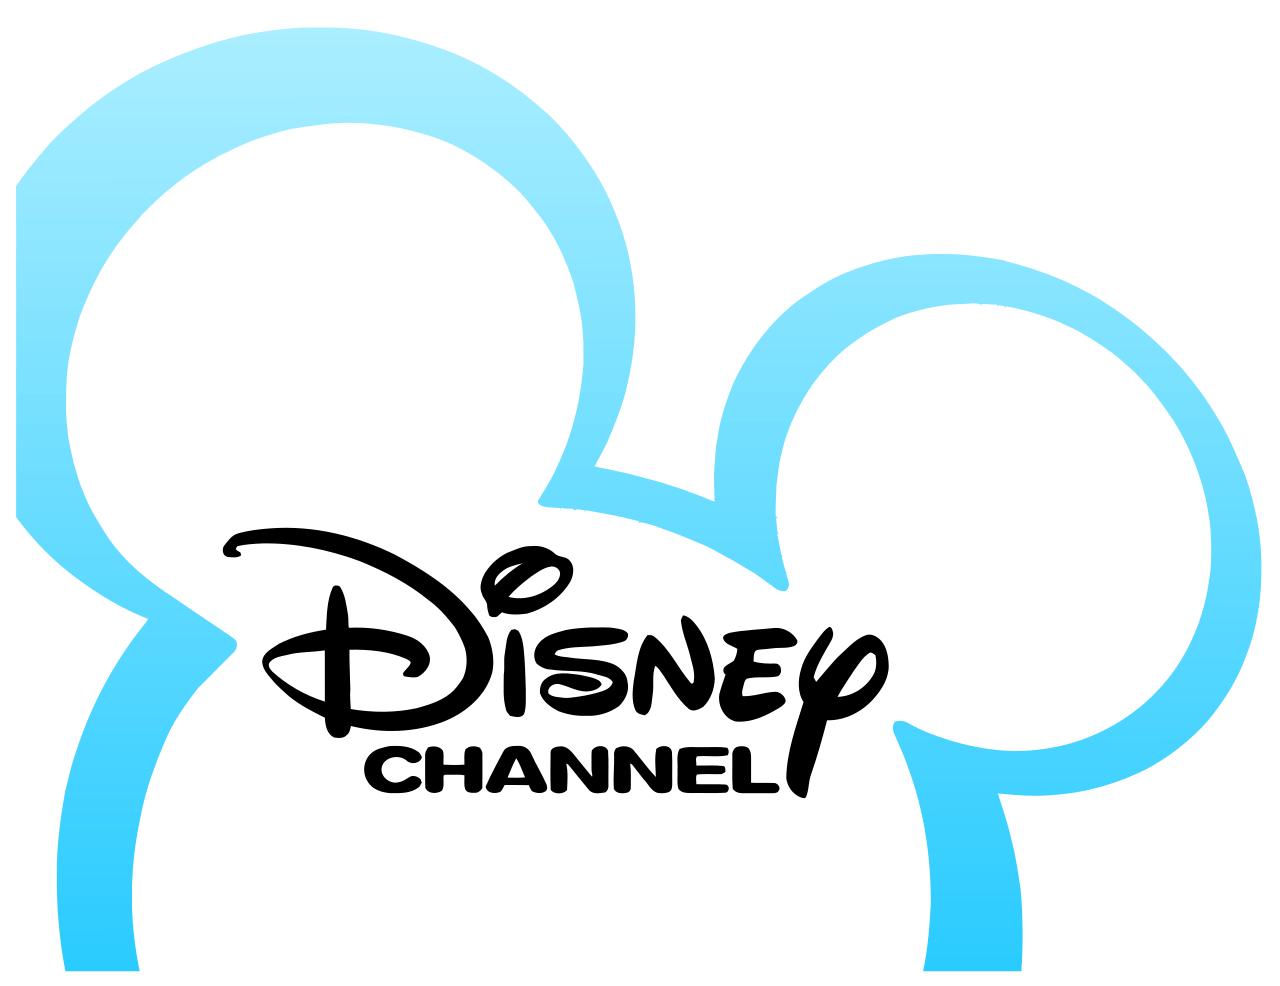 Disneychannel.com Logo - Disney Channel logo.svg